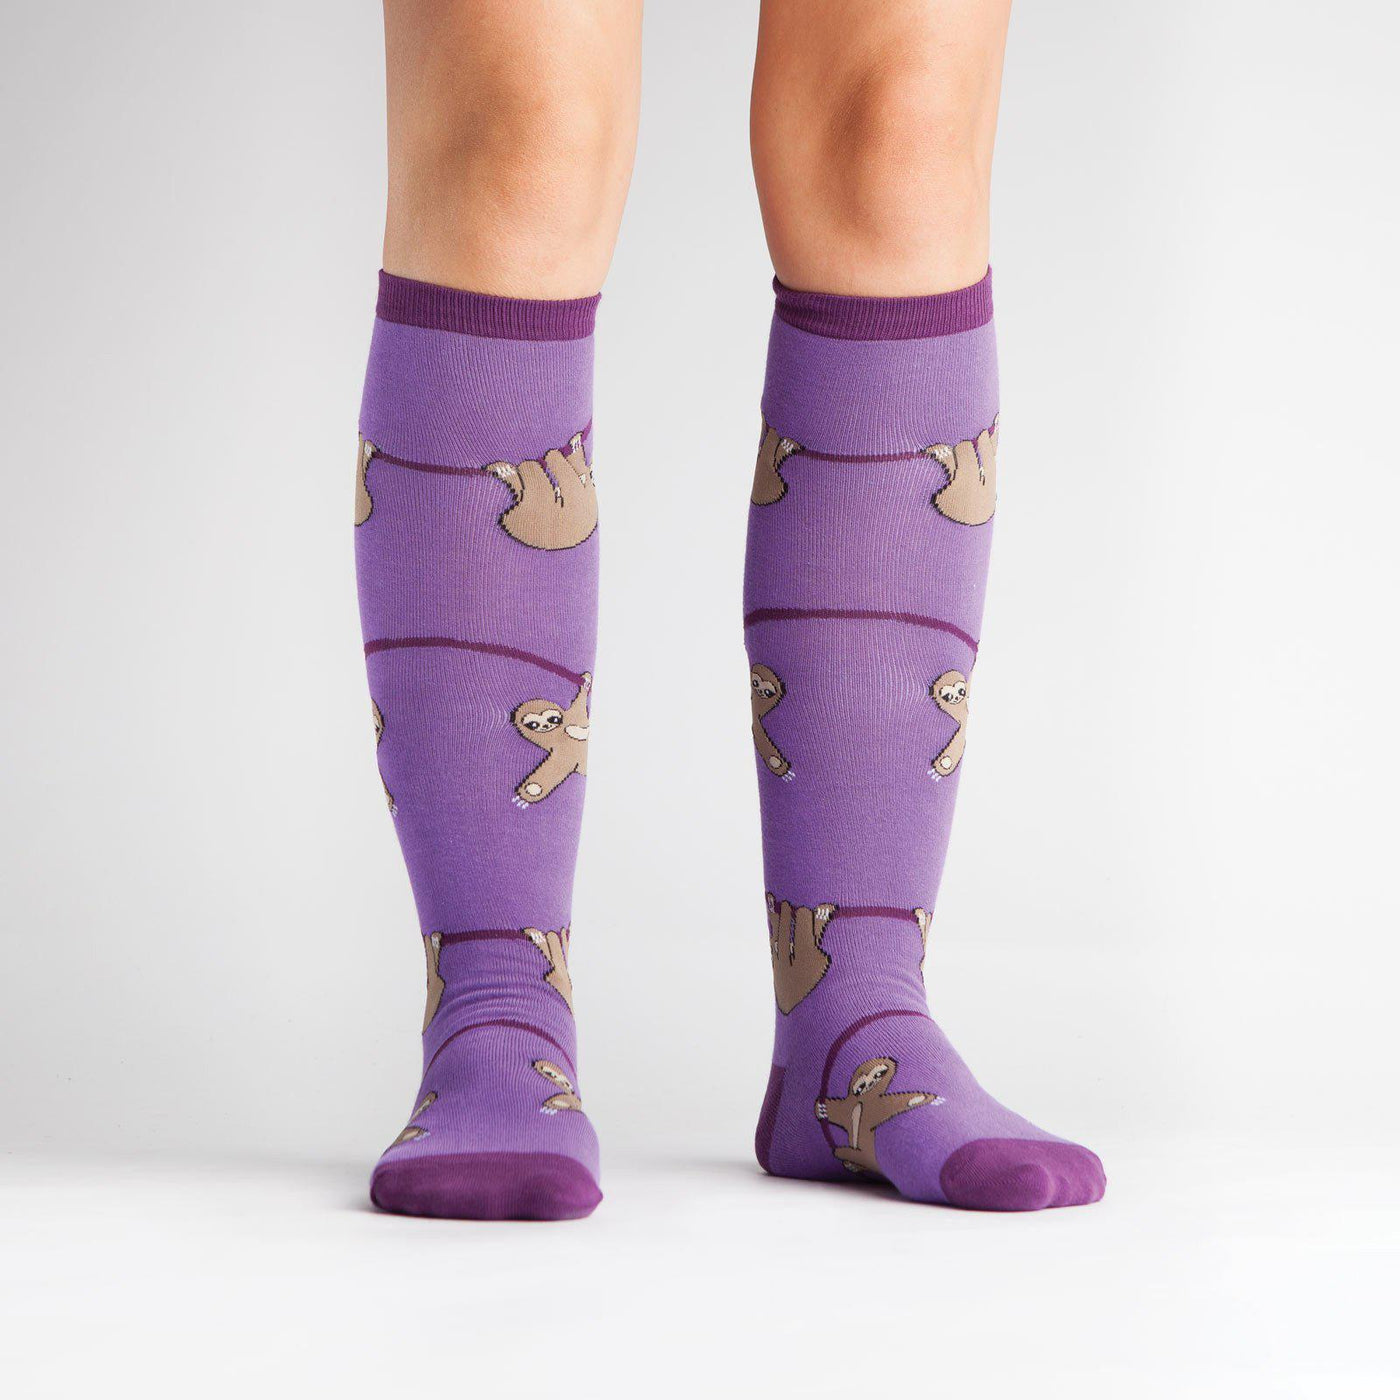 Sock It To Me - Sloth Knee High Socks | Women's - Knock Your Socks Off